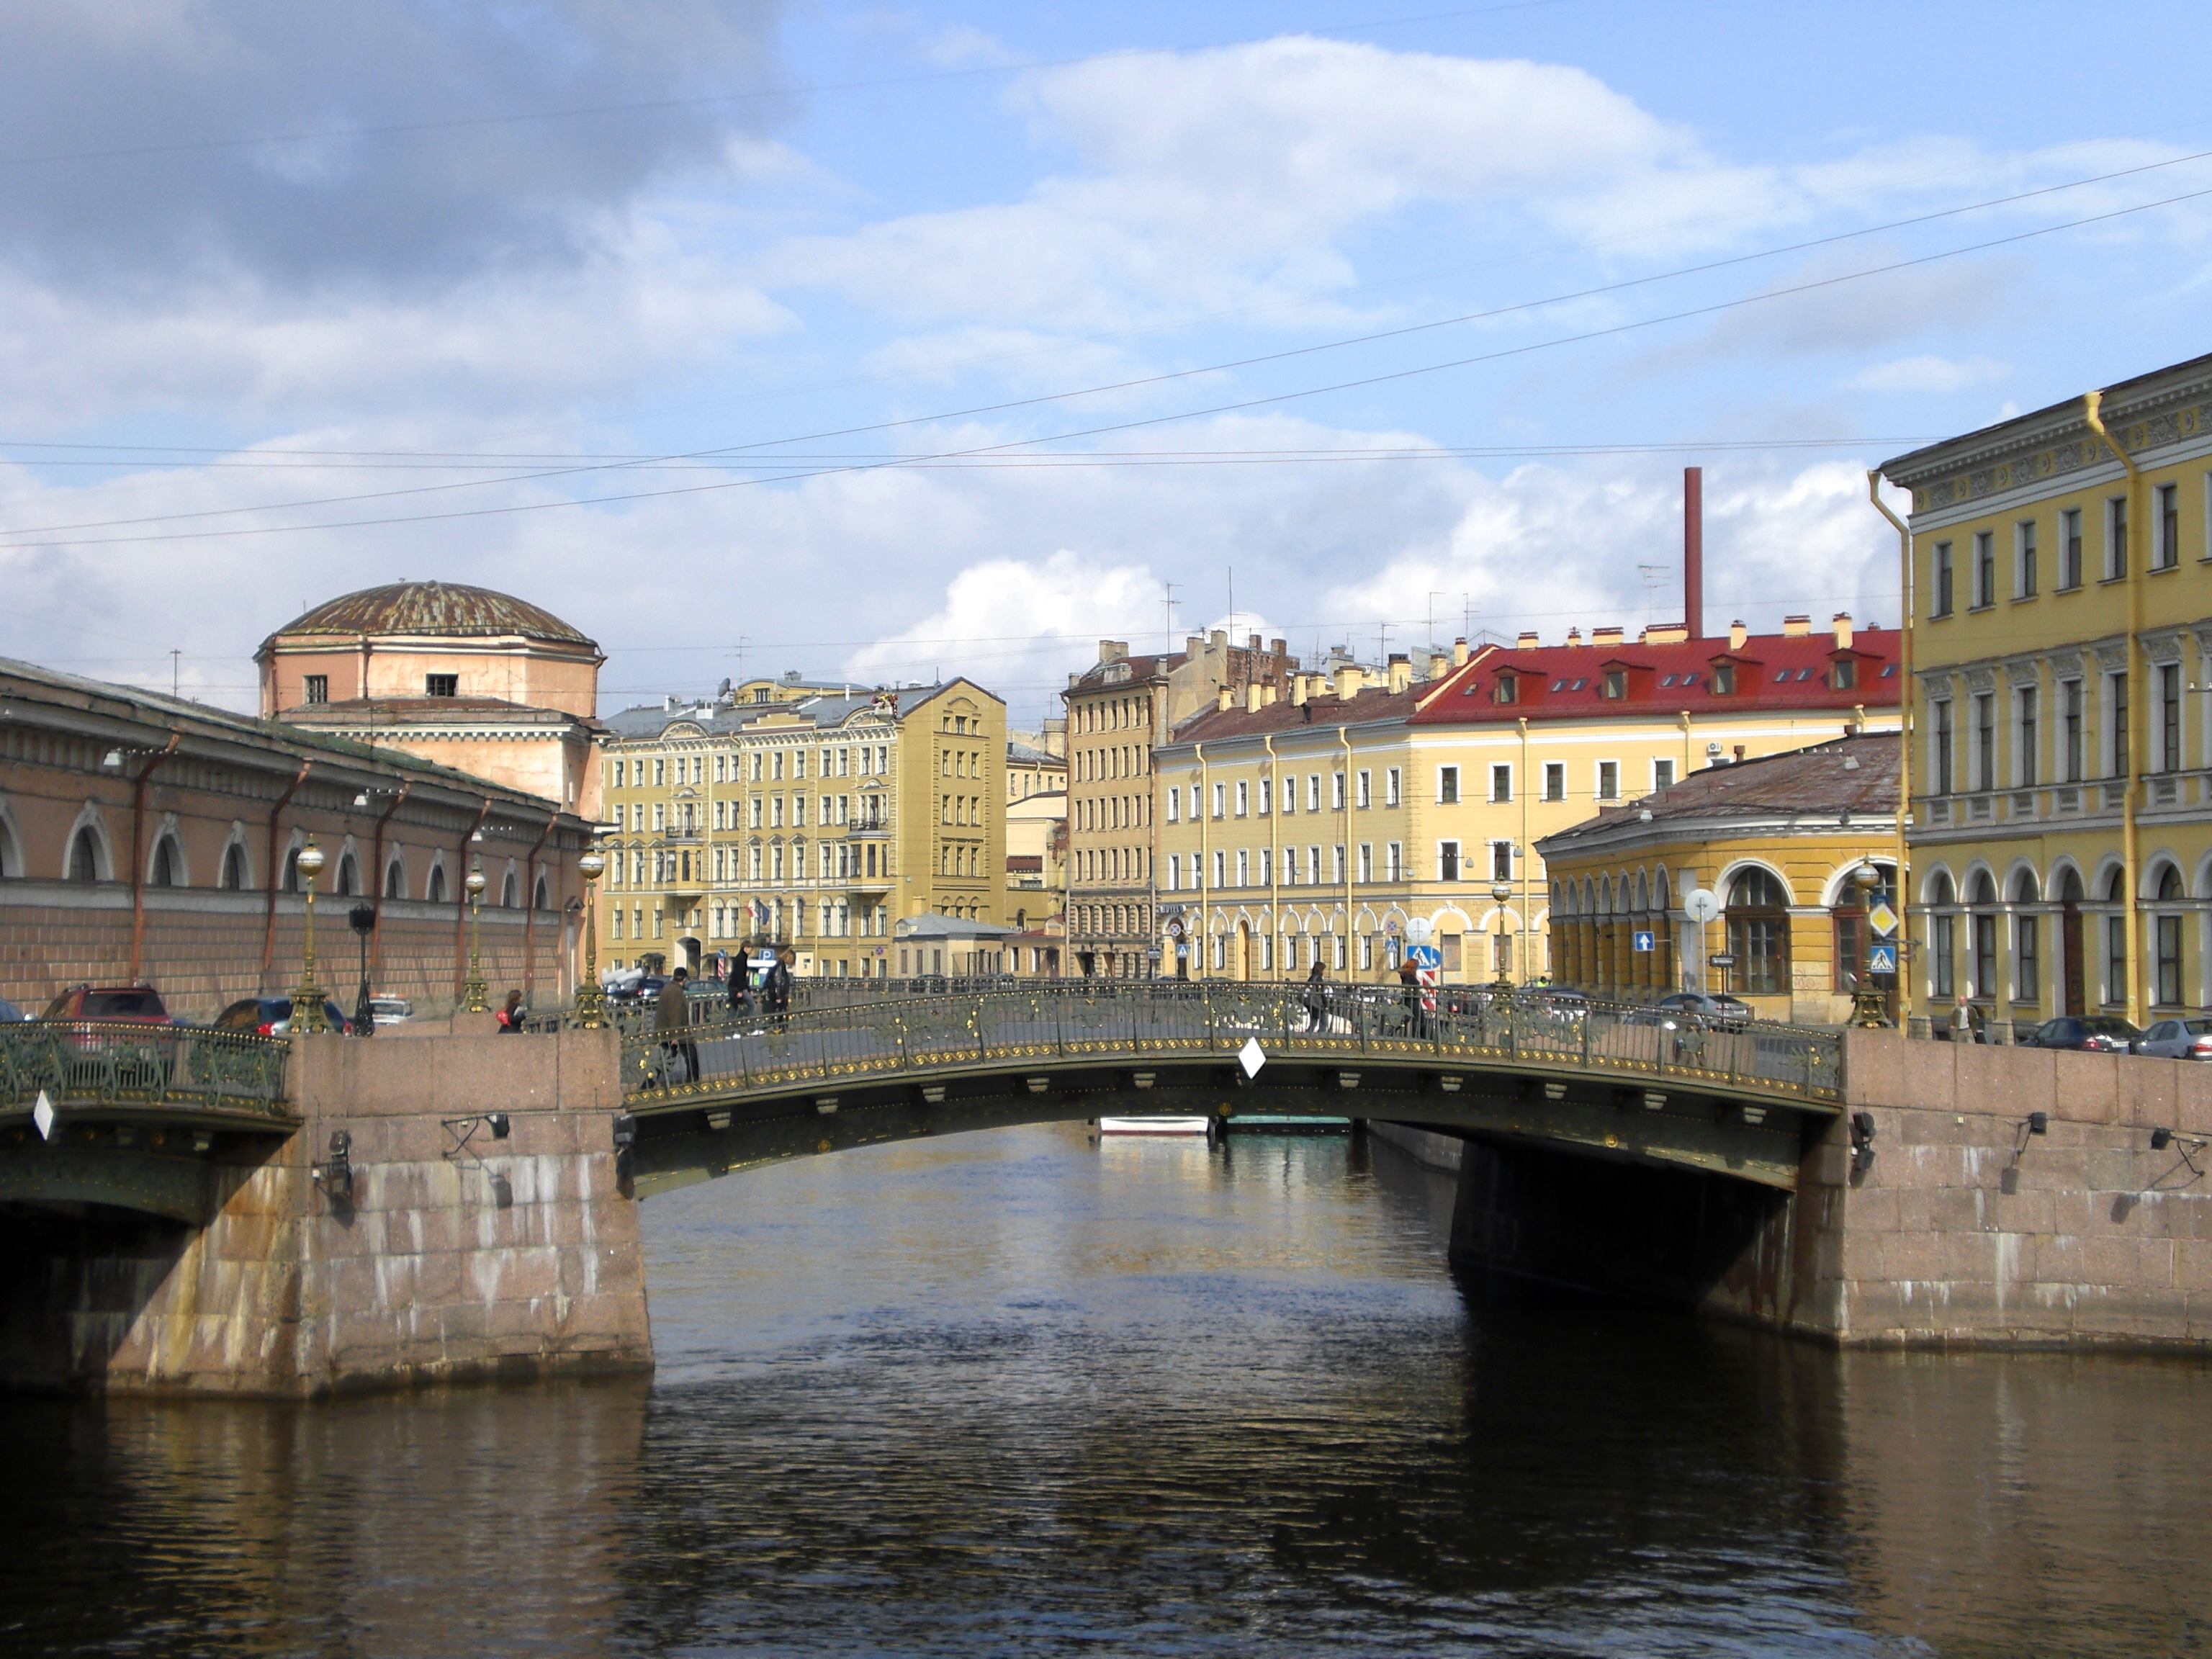 File:St. Petersburg - Canal Scene - Russia 01.JPG - Wikimedia Commons